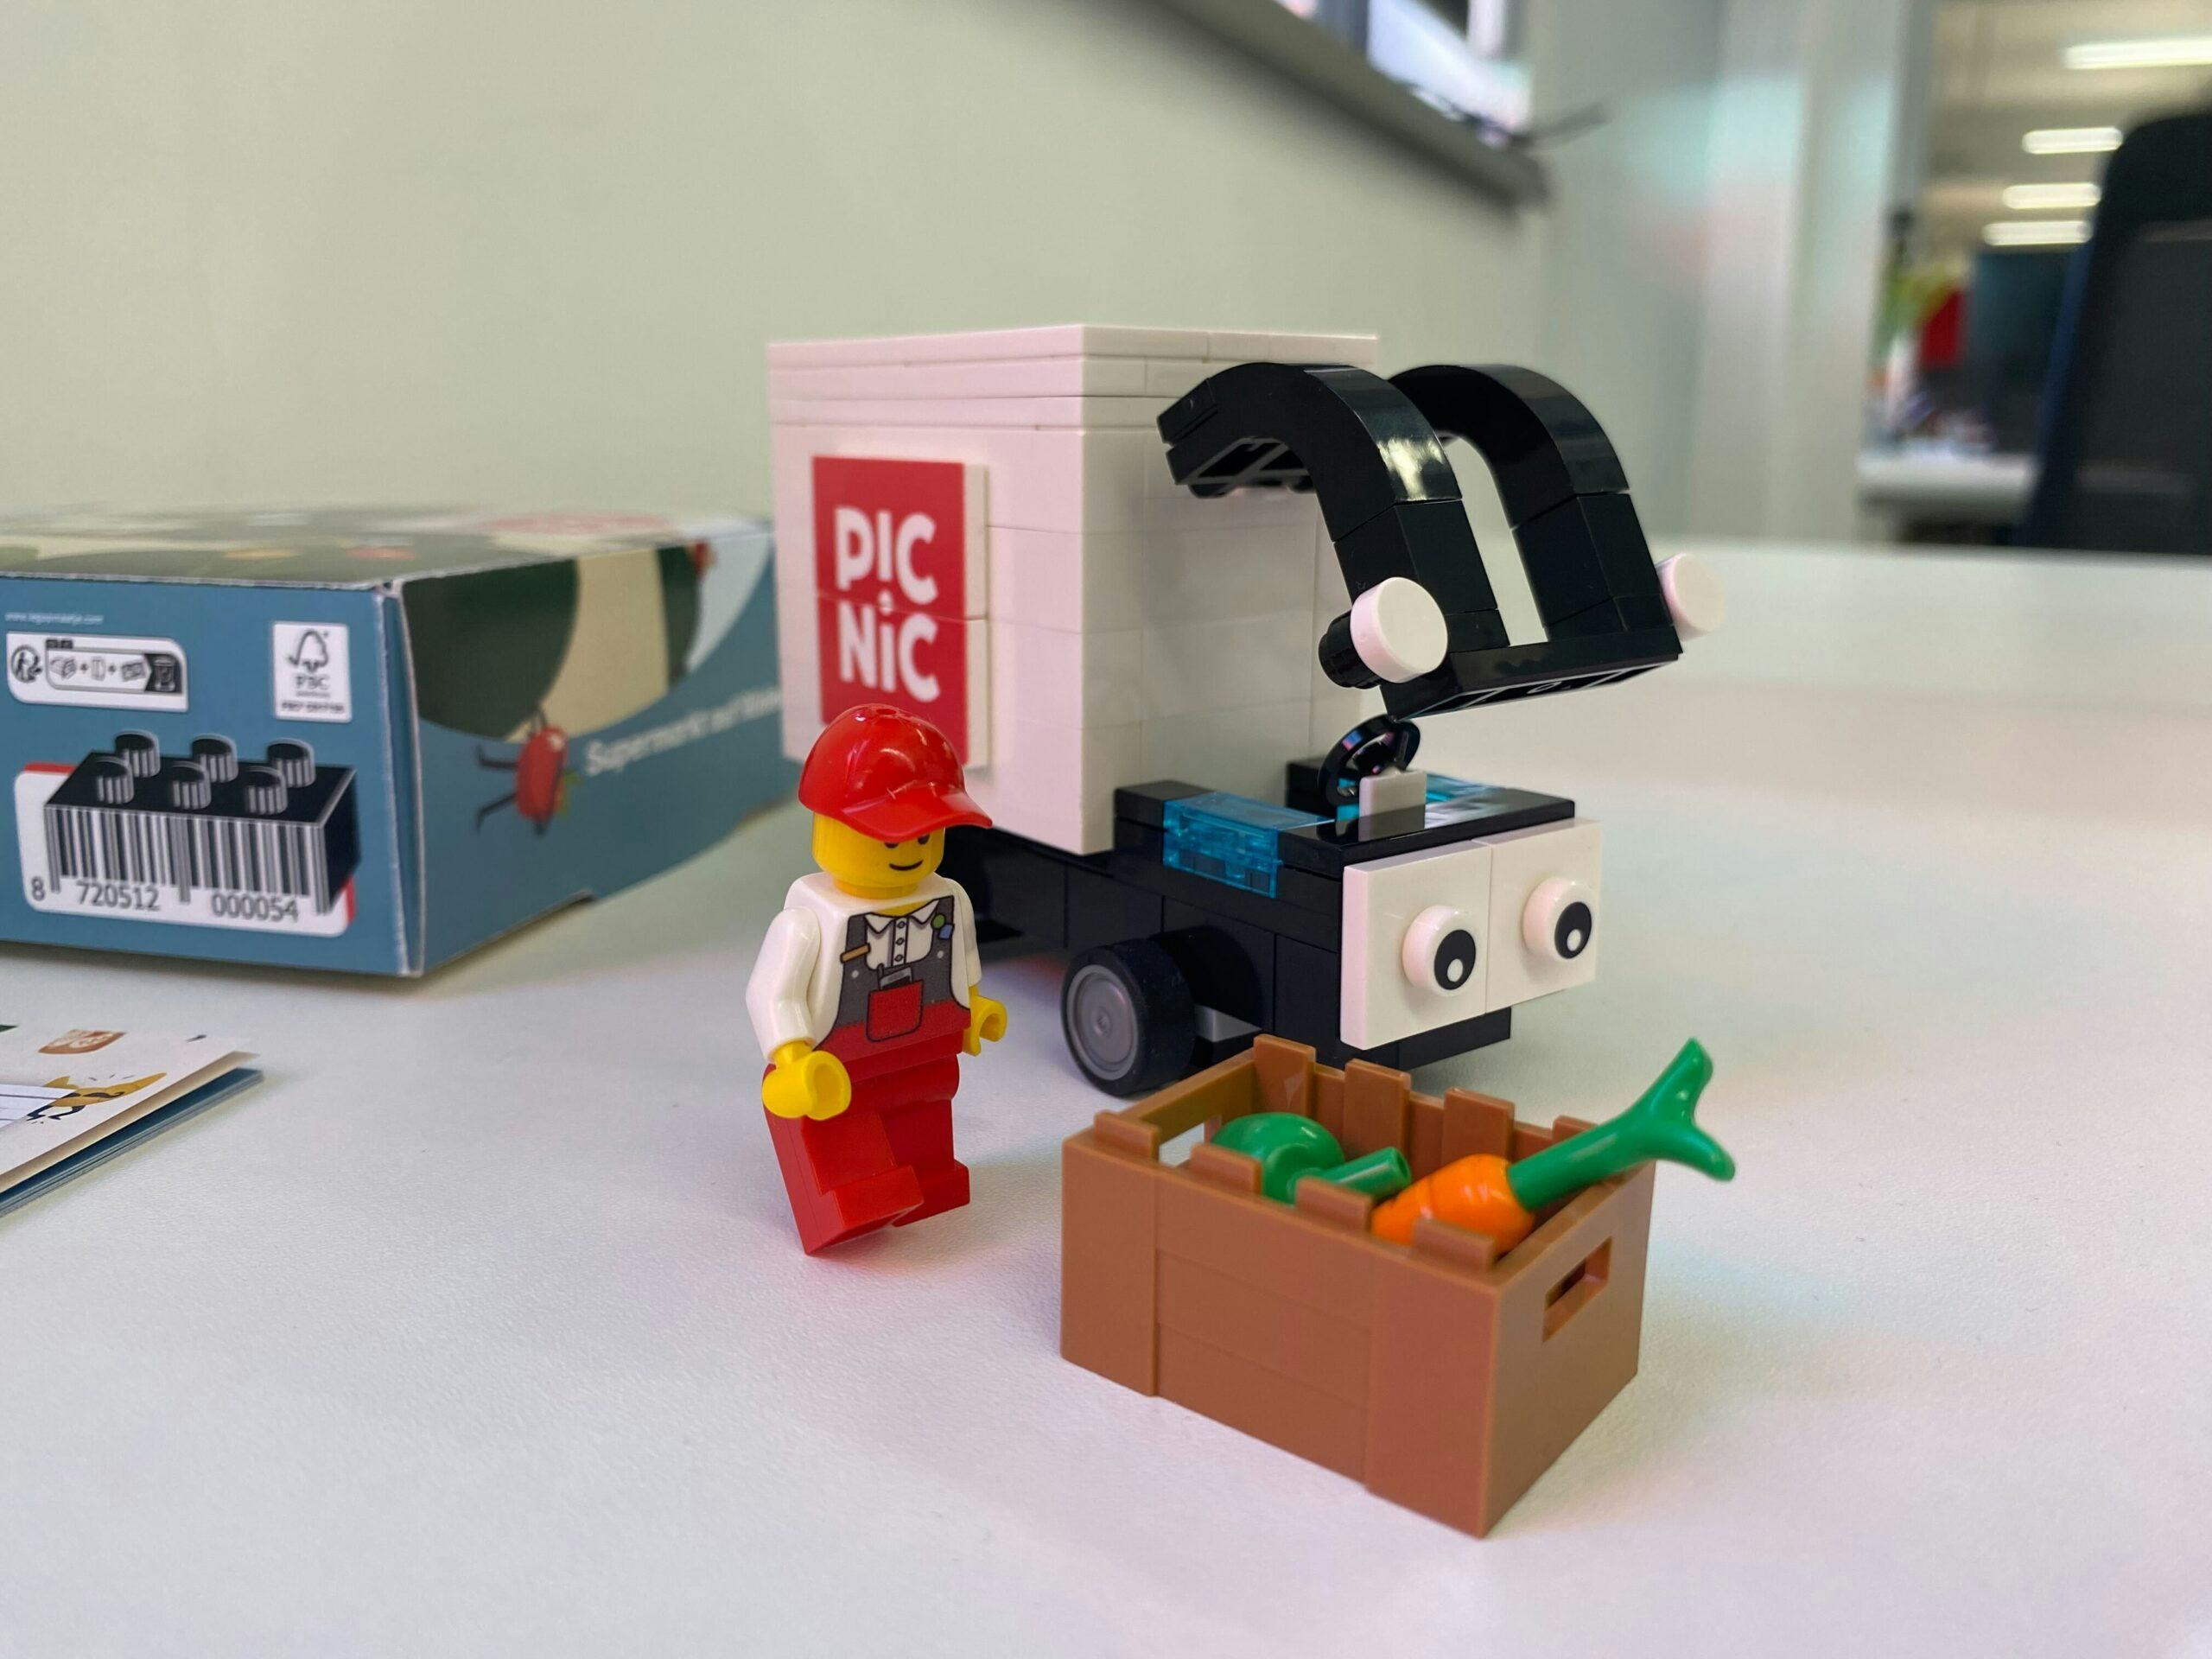 Het Lego-wagentje van Picnic. Foto:Picnic